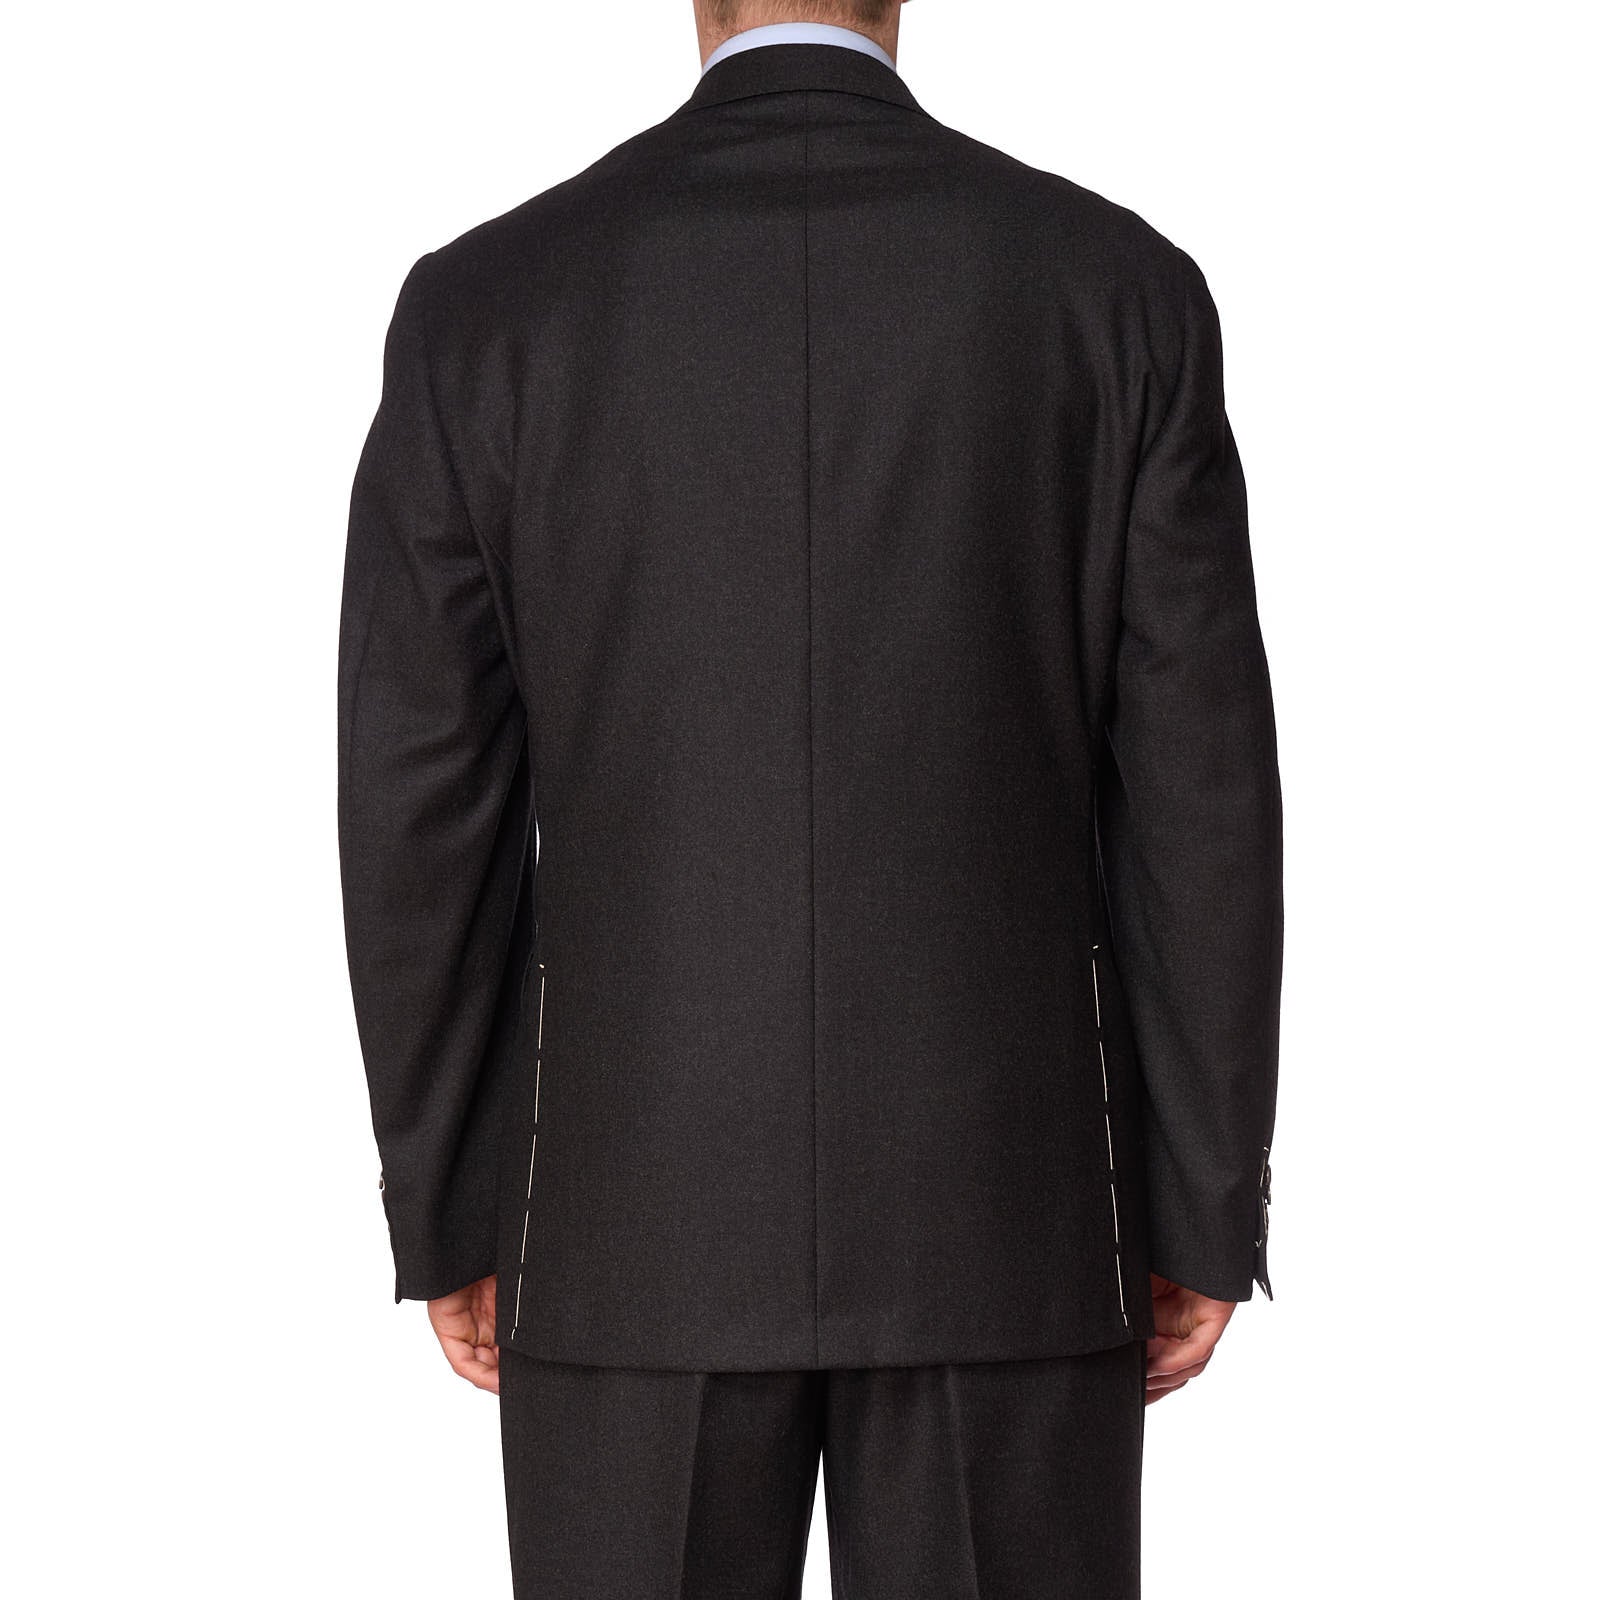 SARTORIA PARTENOPEA Charcoal Gray Wool Handmade Suit EU 56 NEW US 44 46